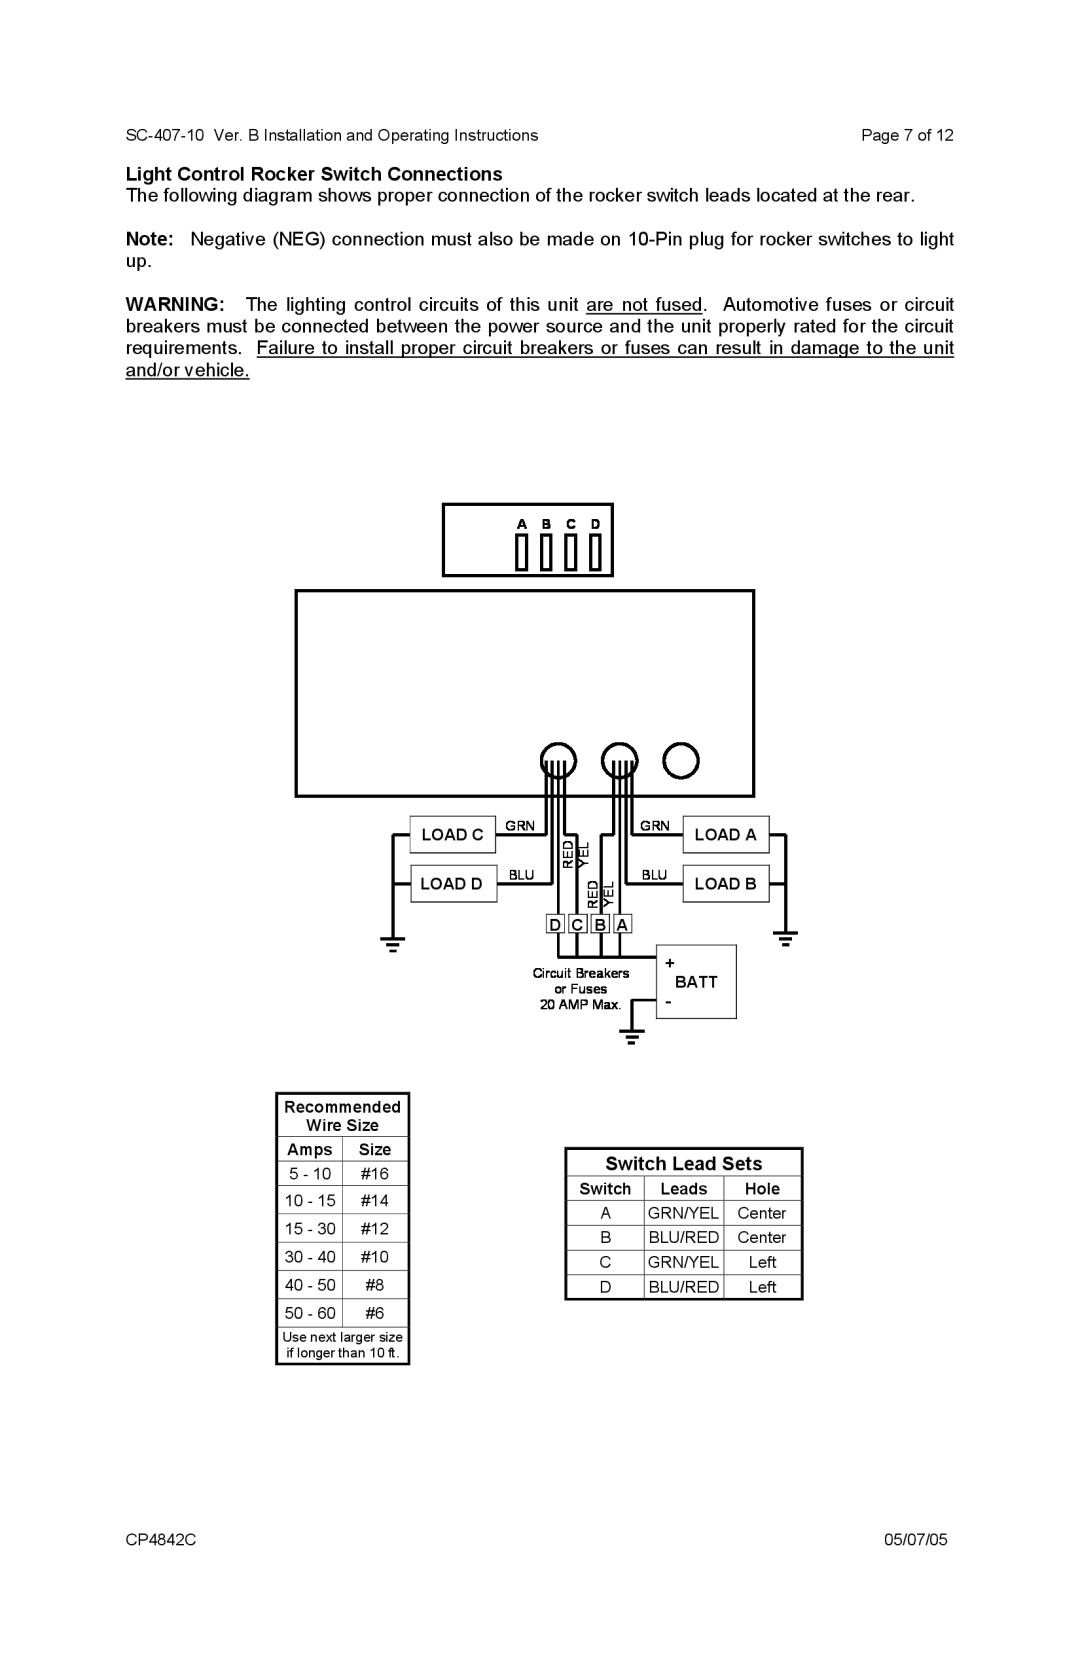 Carson SC-407 Light Control Rocker Switch Connections, Switch Lead Sets, Load C Load D, Load A, Load B, D C B A 